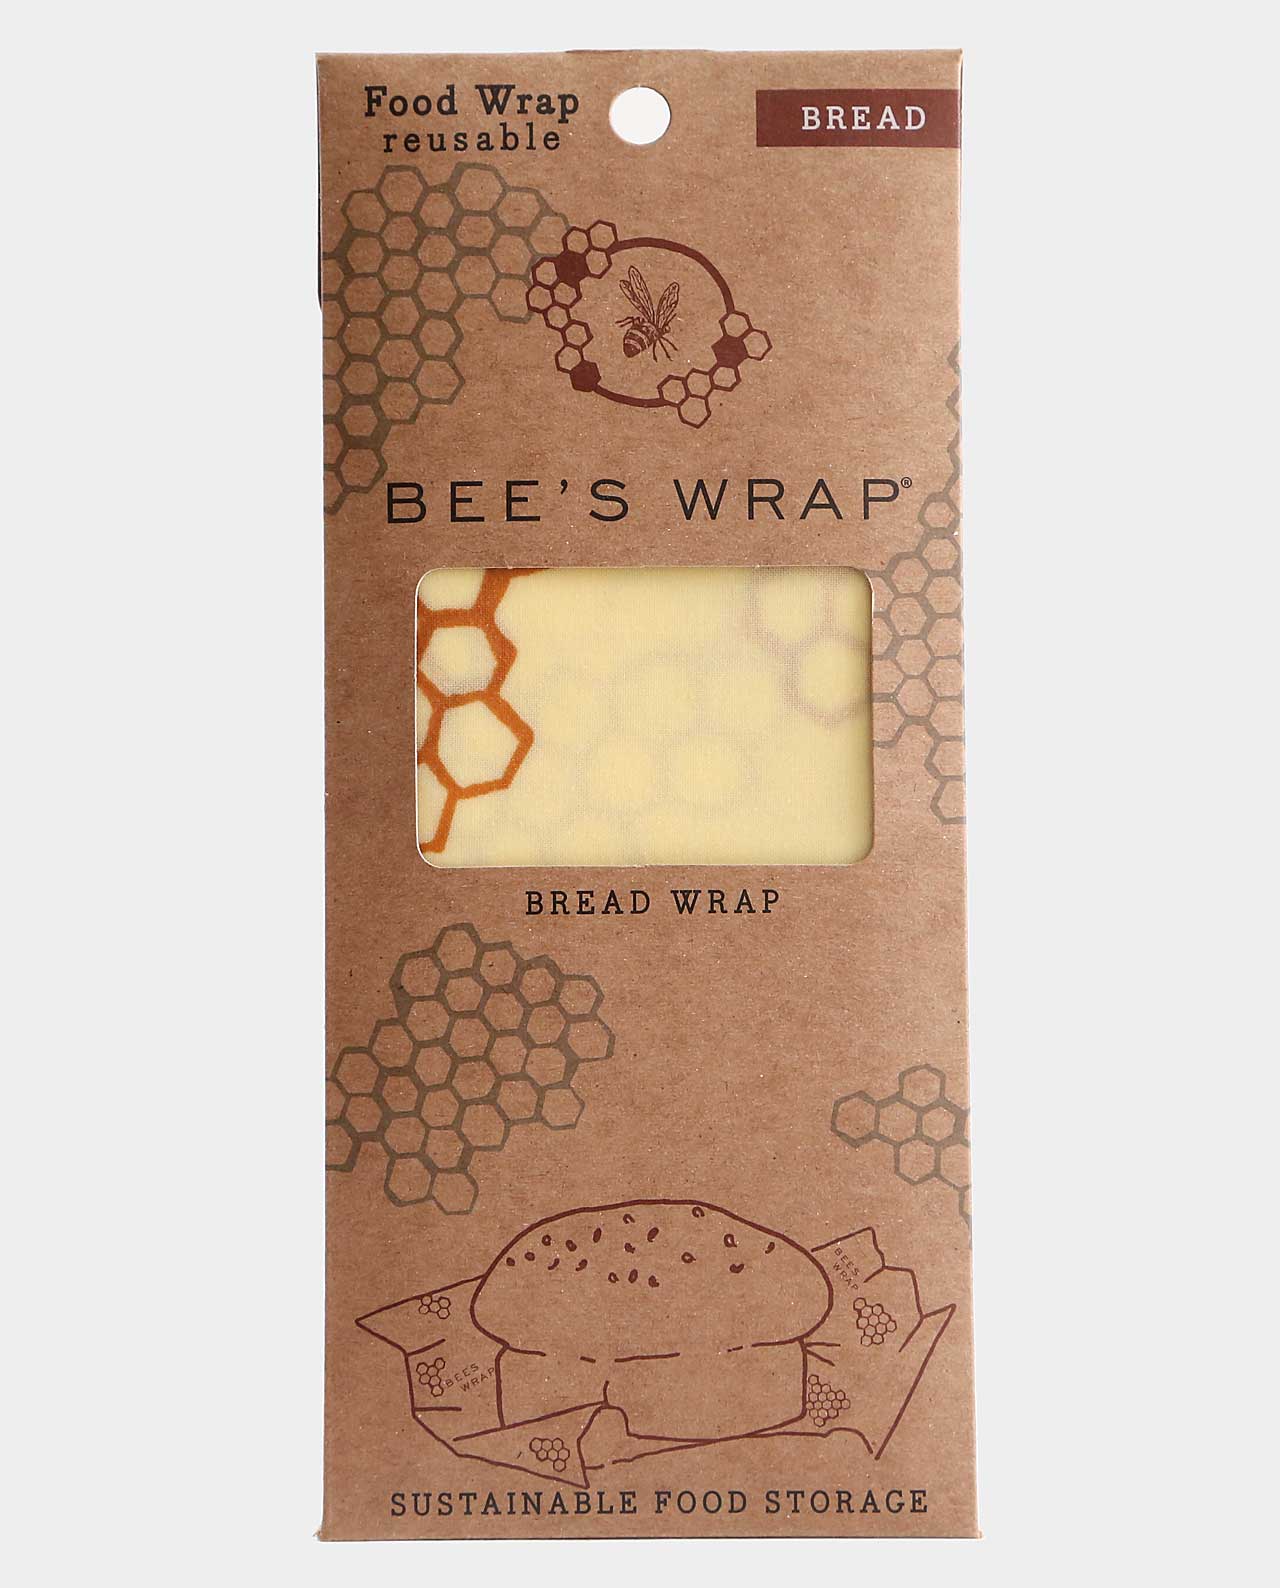 Bee's Wrap Review 2020: Eco-Friendly Alternative to Plastic Wrap